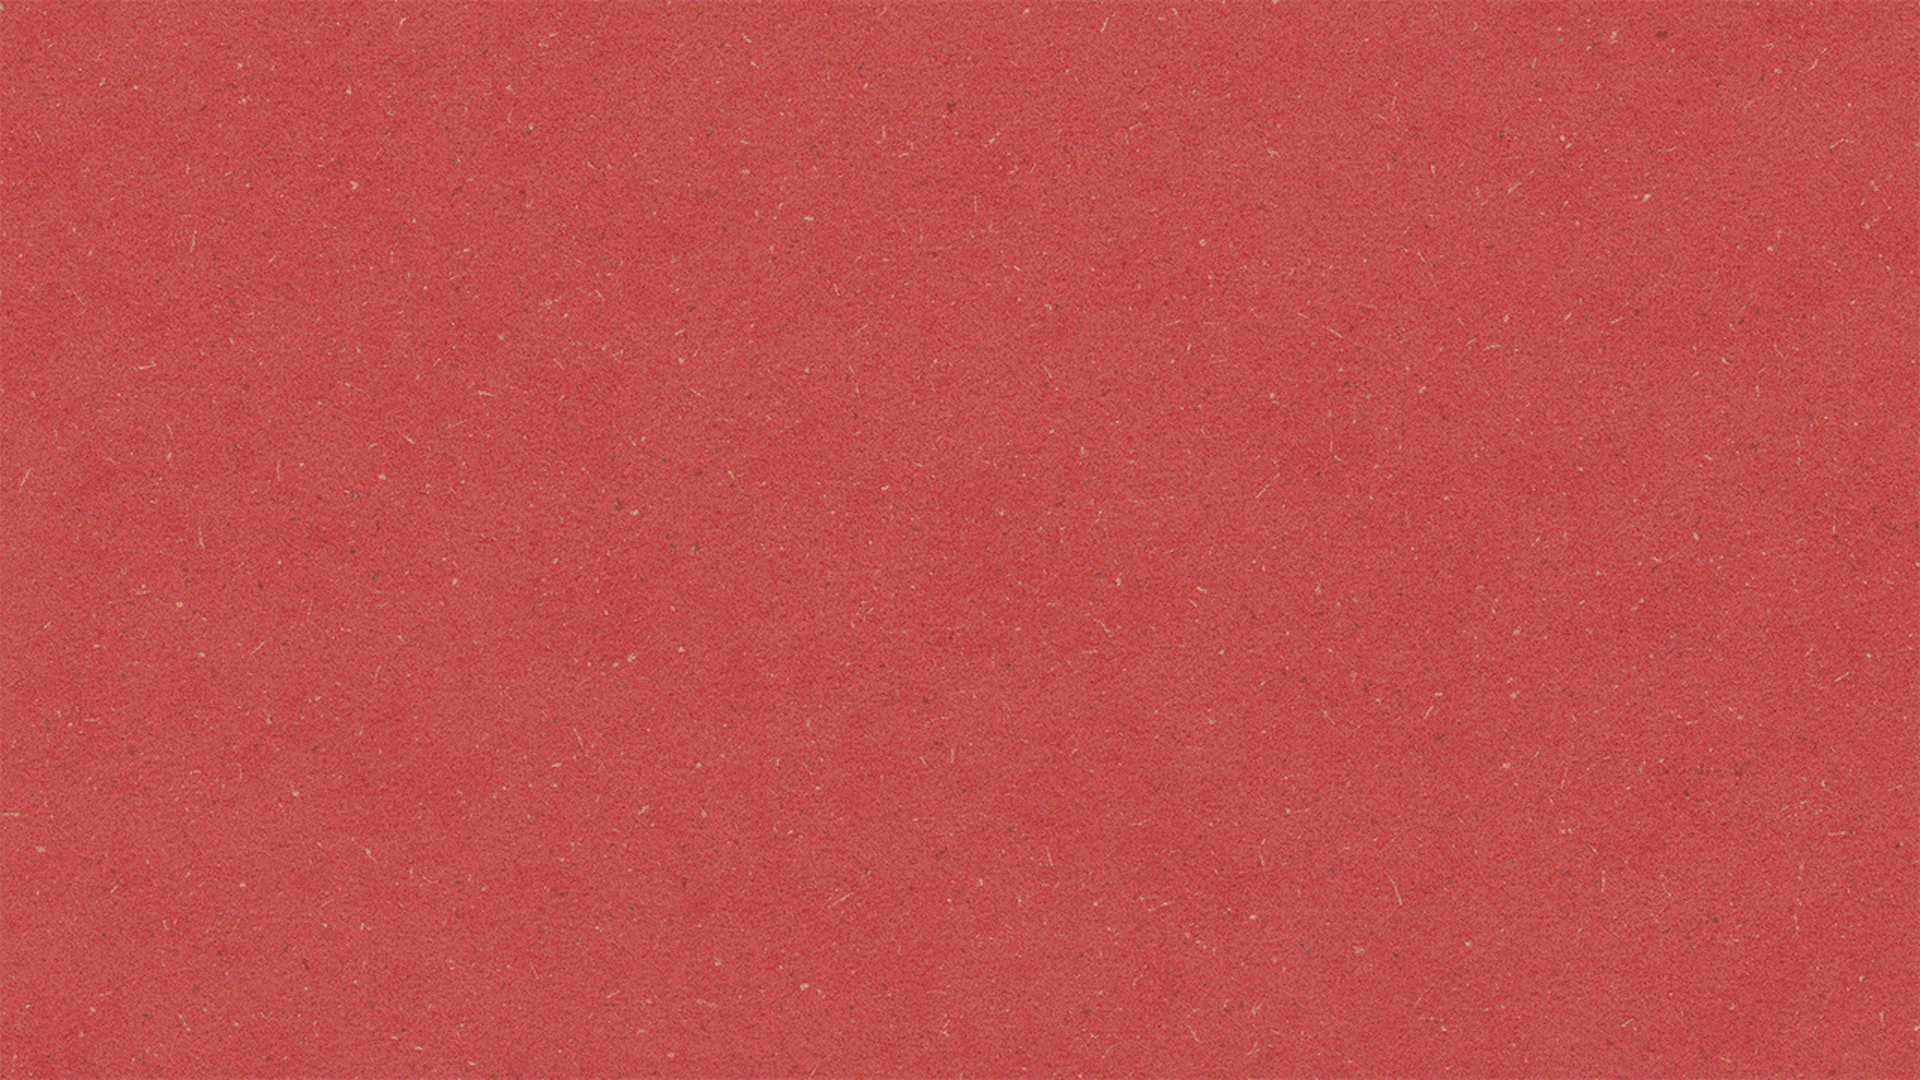 Wineo Organic Floor 1500 chip Cherry Red (PLR387C)